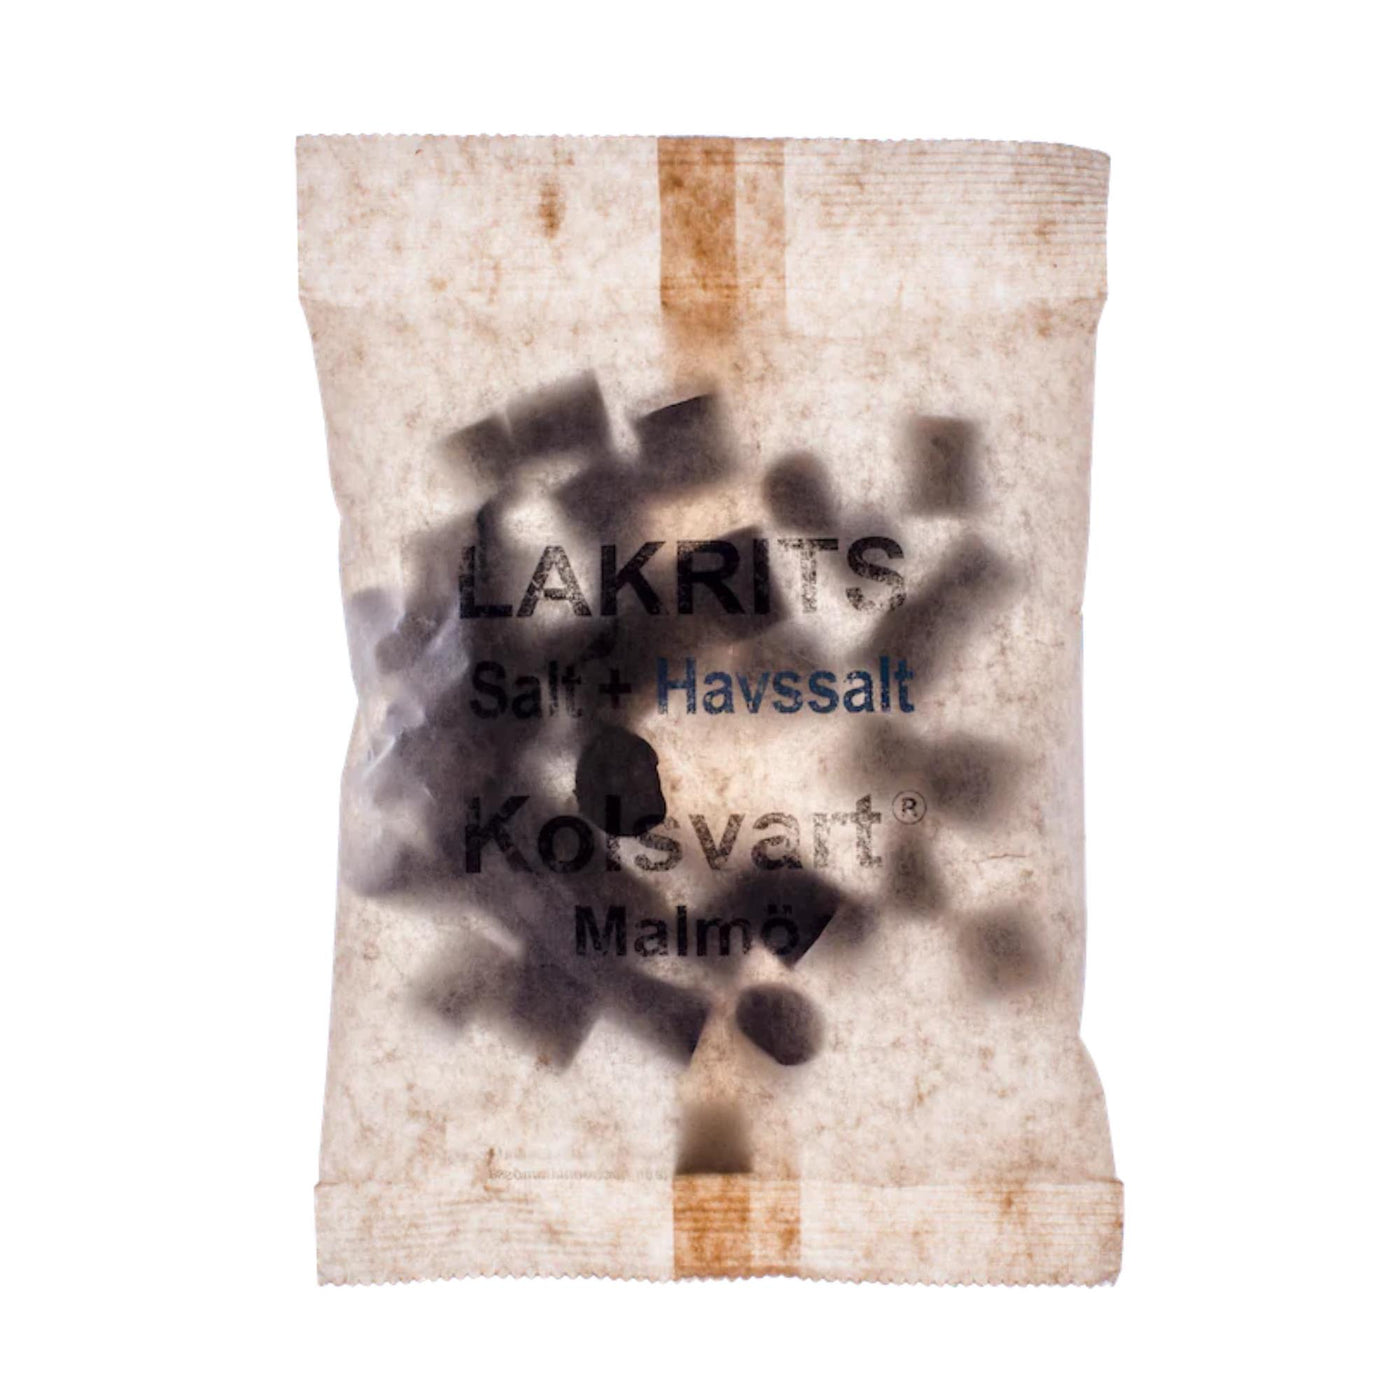 Kolsvart Lakrits Salt + Havsalt - Swedish Salty Liquorice Buttons With Sea Salt